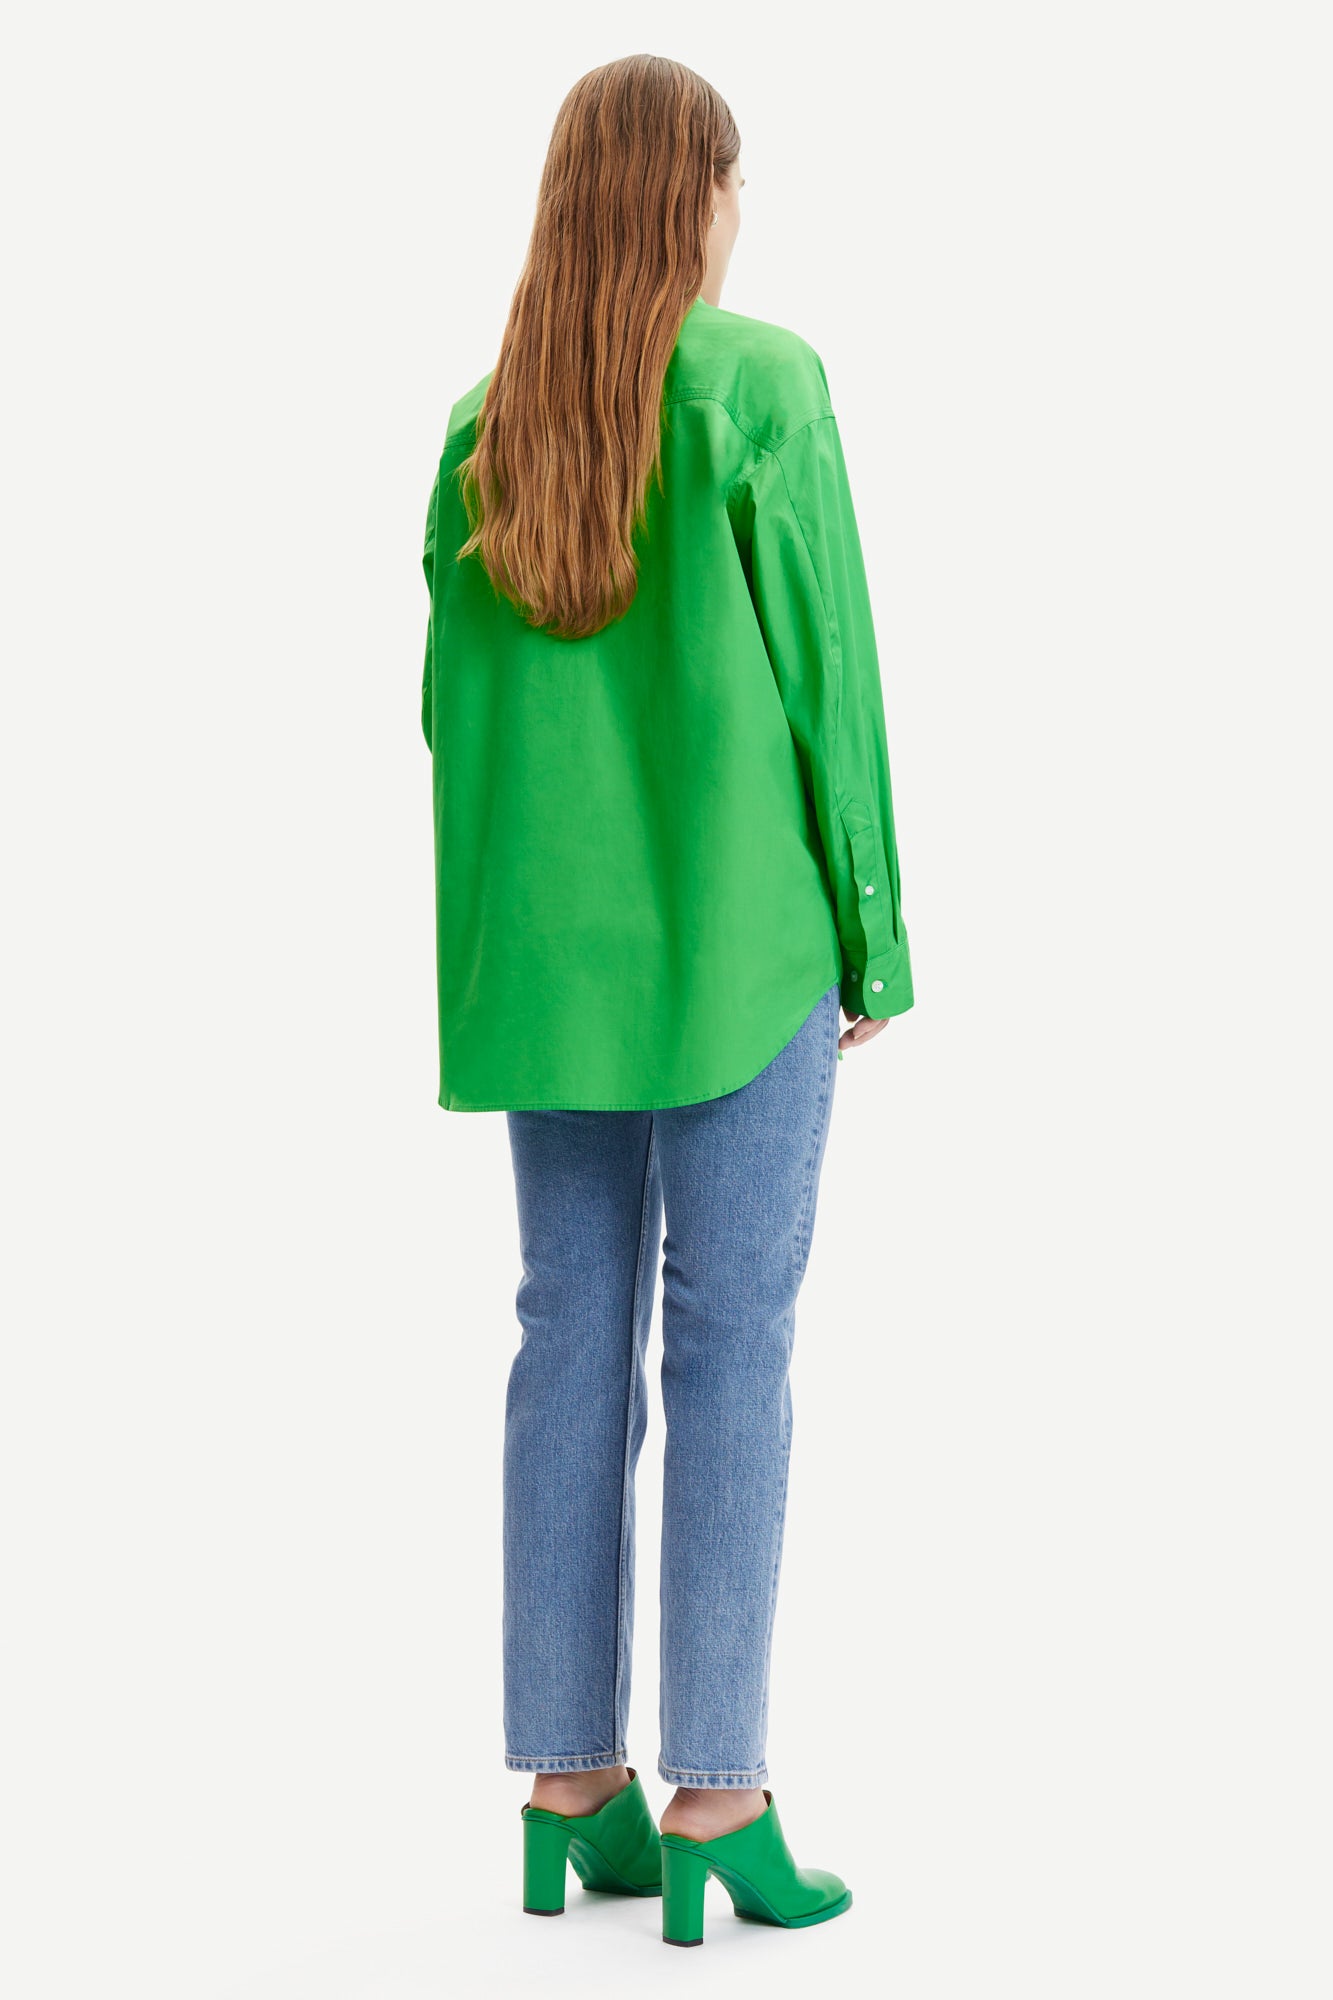 Lua shirt - vibrant green